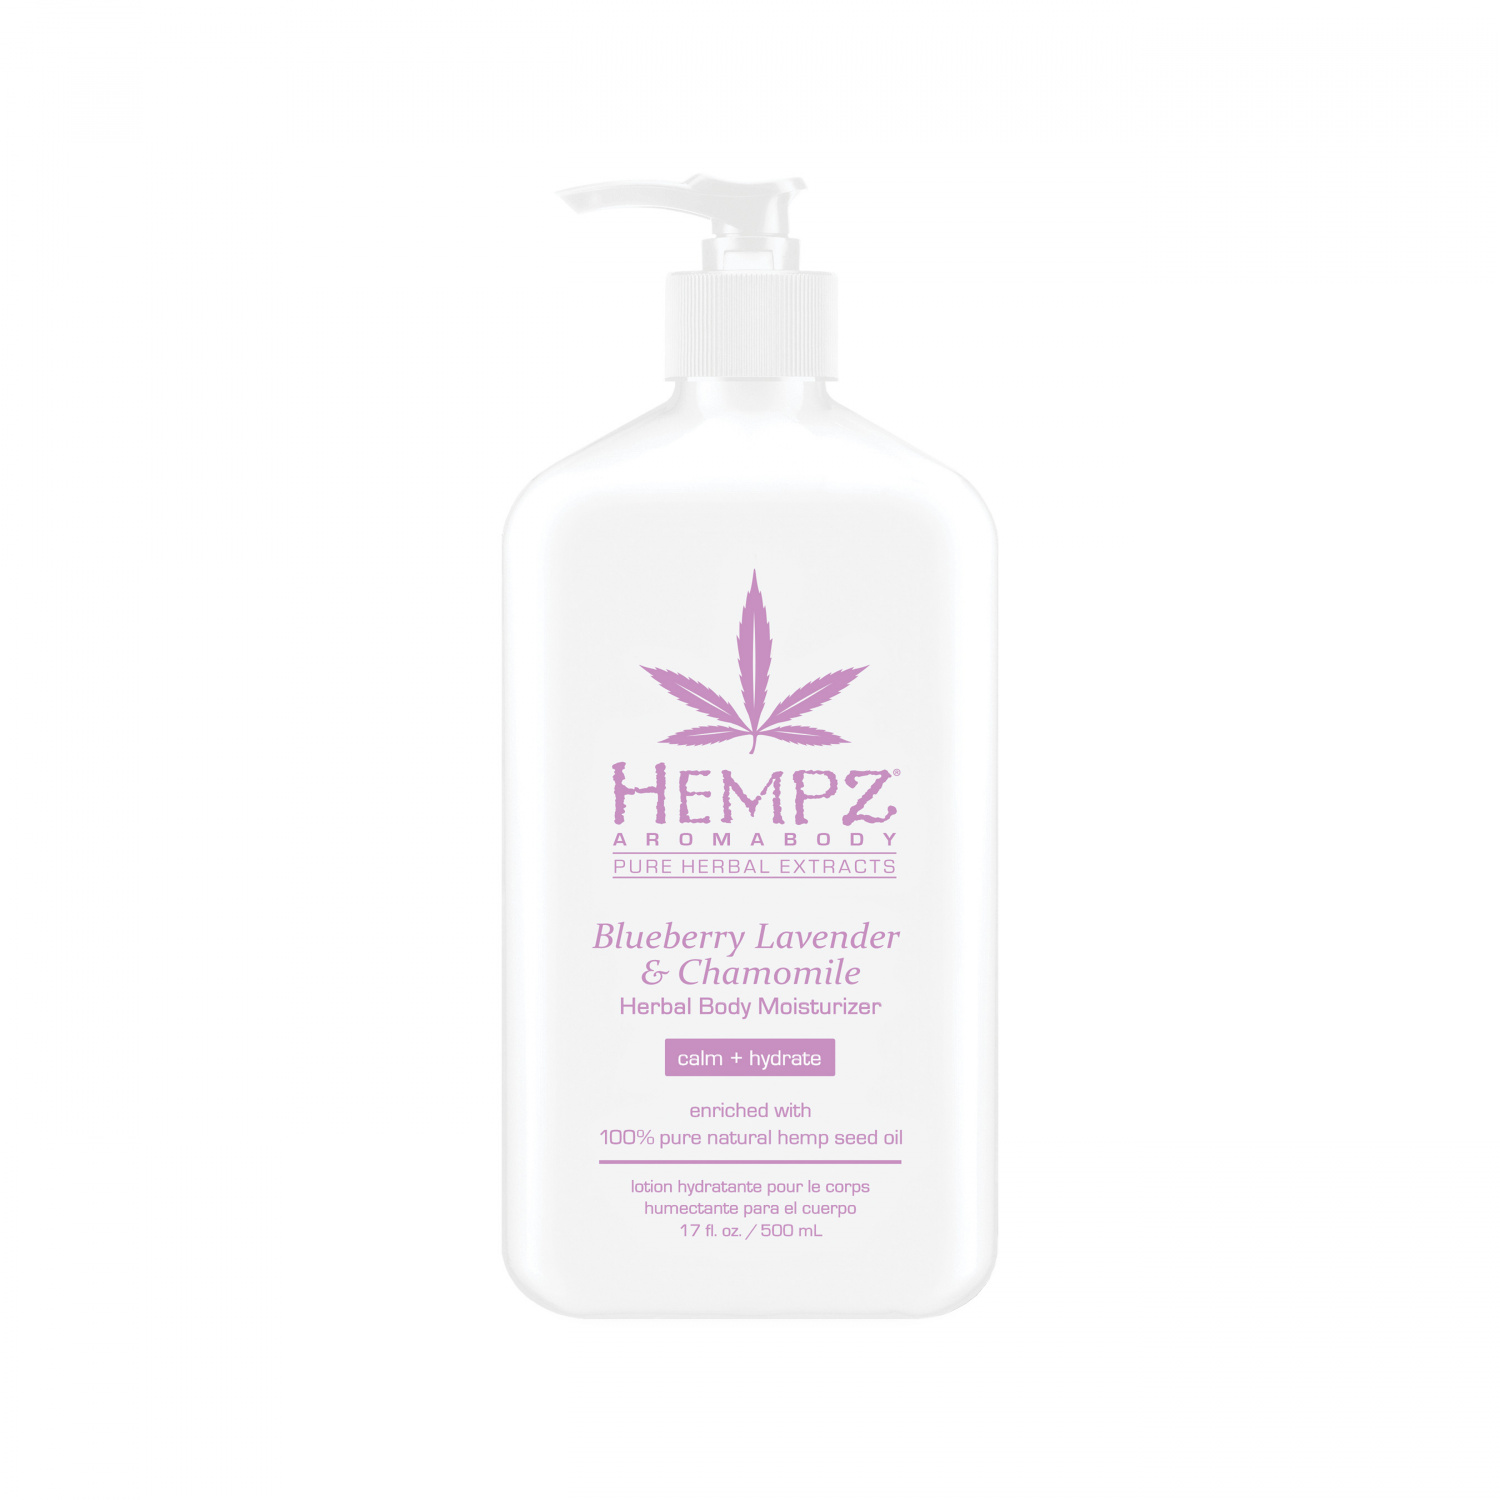 Hempz Blueberry Lavender & Chamomile Herbal Body Moisturizer 500ml - интернет-магазин профессиональной косметики Spadream, изображение 27714